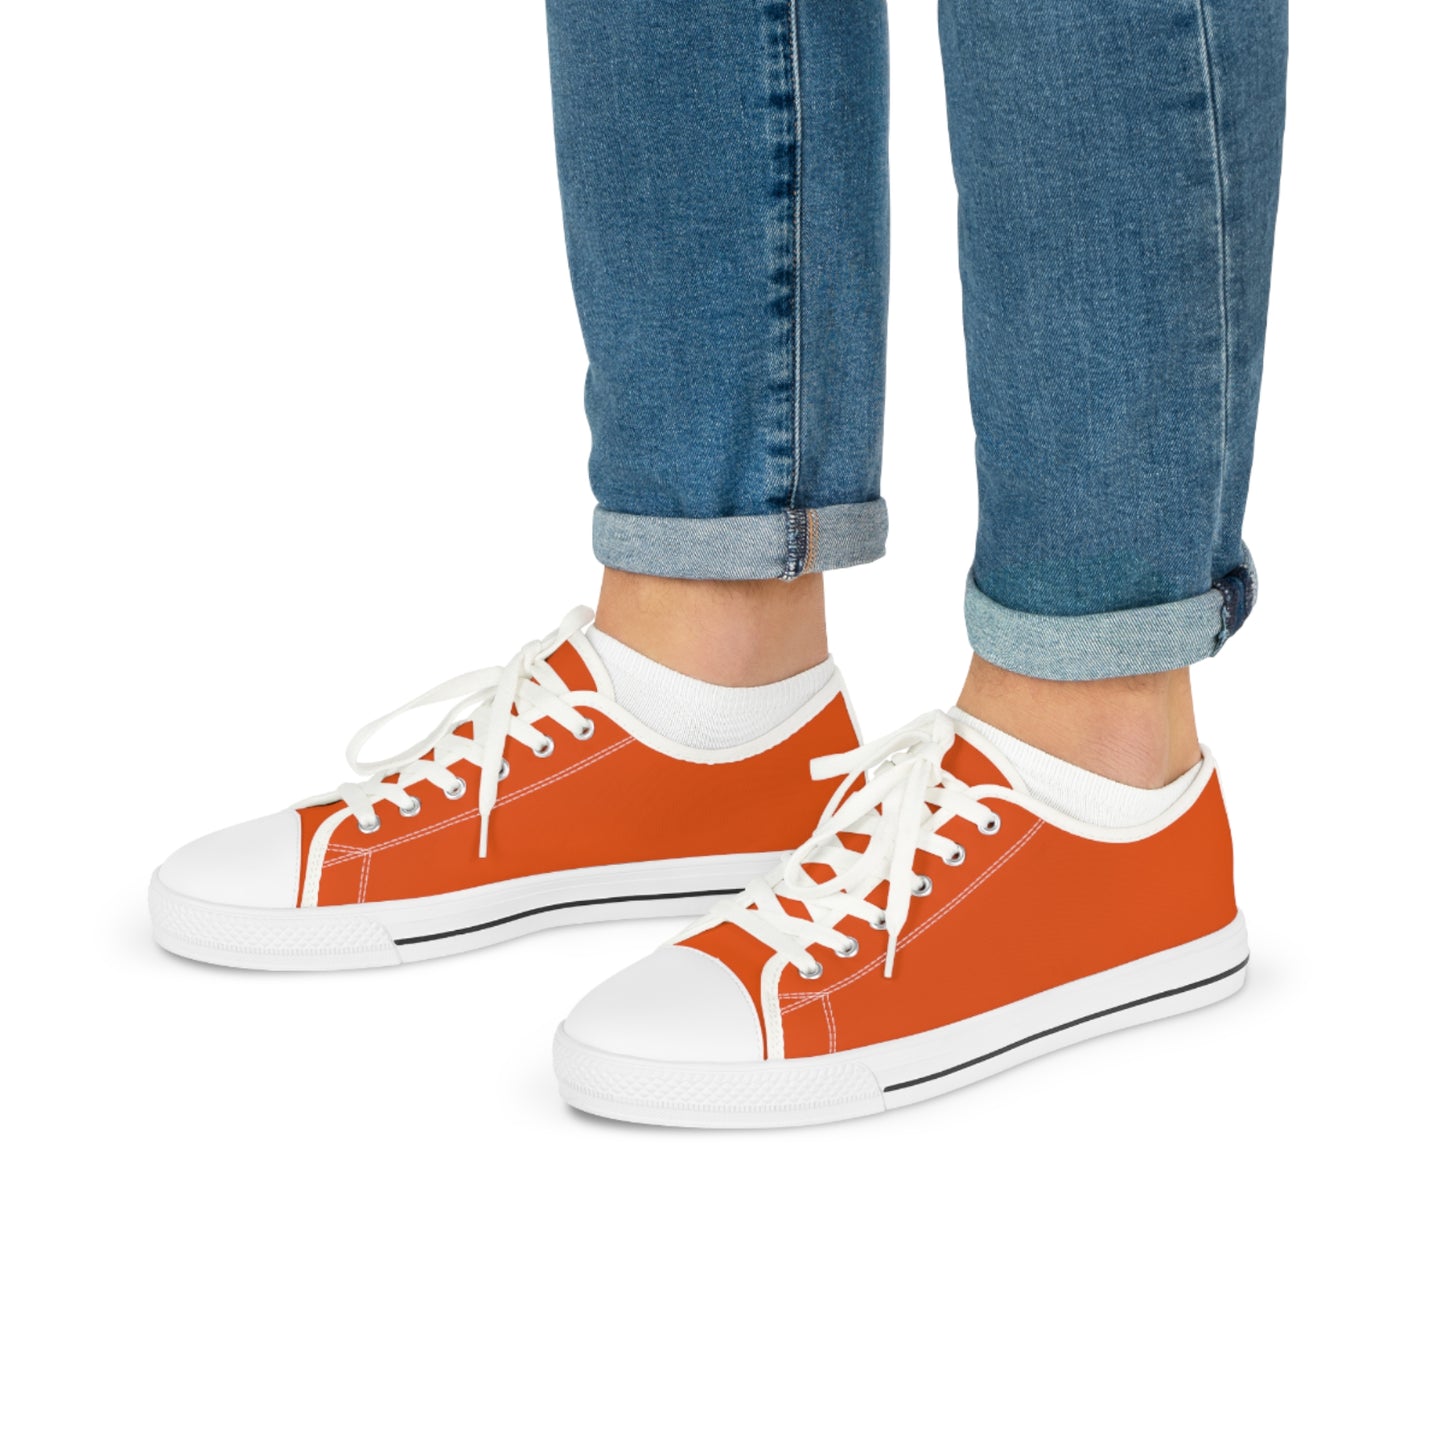 Men's Low Top Sneakers - Dark Orange US 14 Black sole